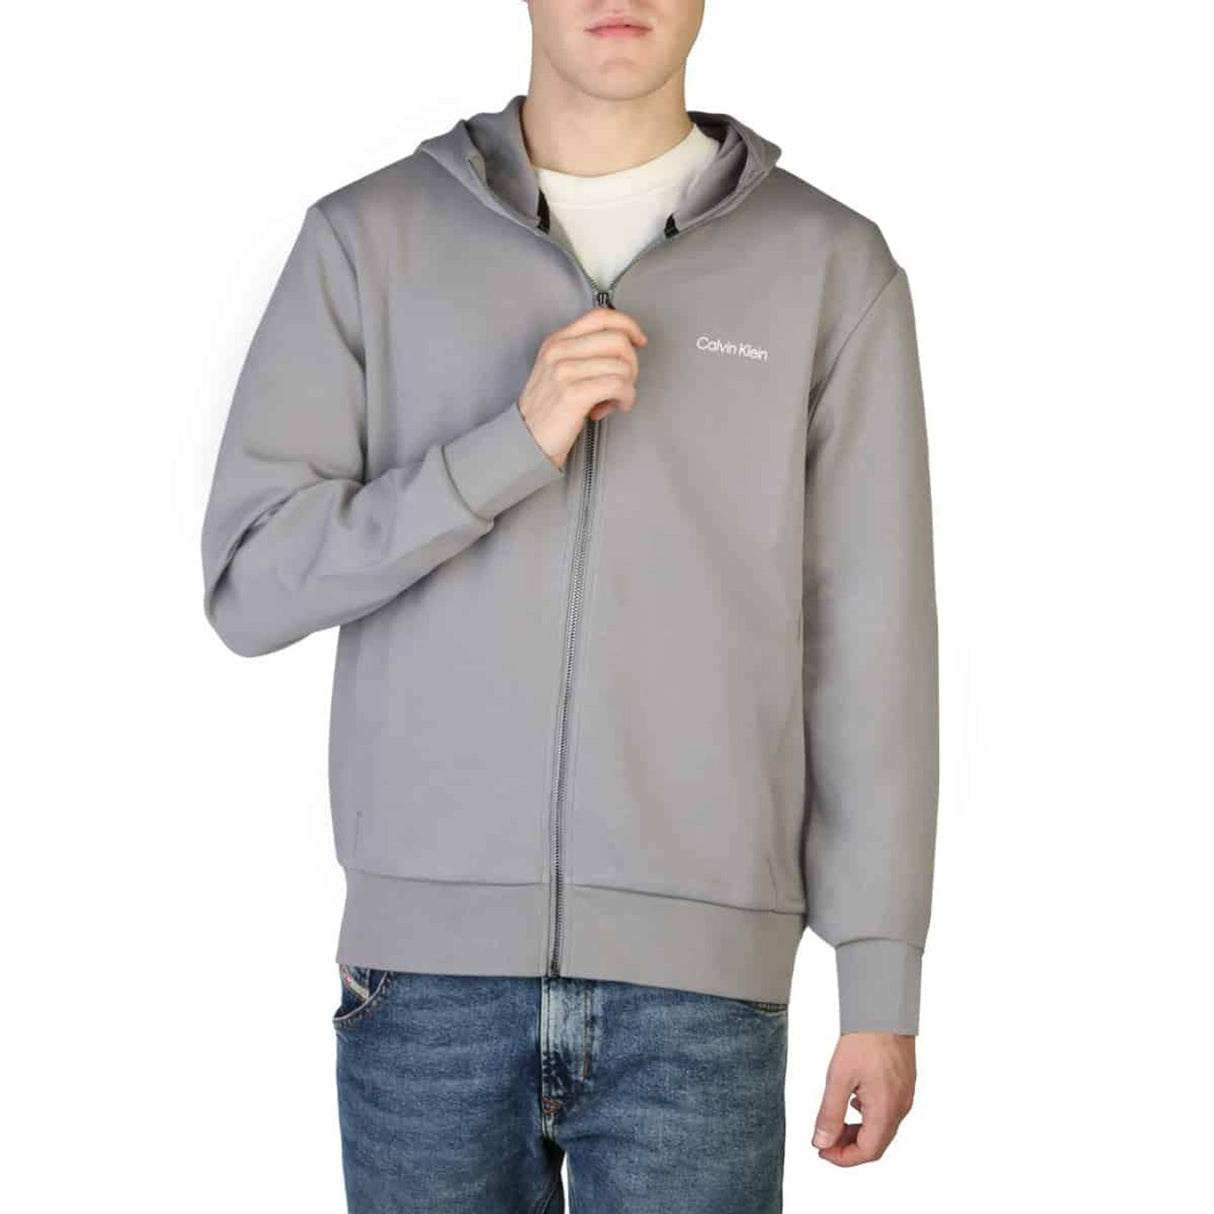 Men's sweatshirt Fall/Winter sweatshirt Zip-up hoodie Cotton blend sweatshirt Unlined sweatshirt (if applicable) Pockets Relaxed fit sweatshirt Fixed hood Ribbed hems sweatshirt